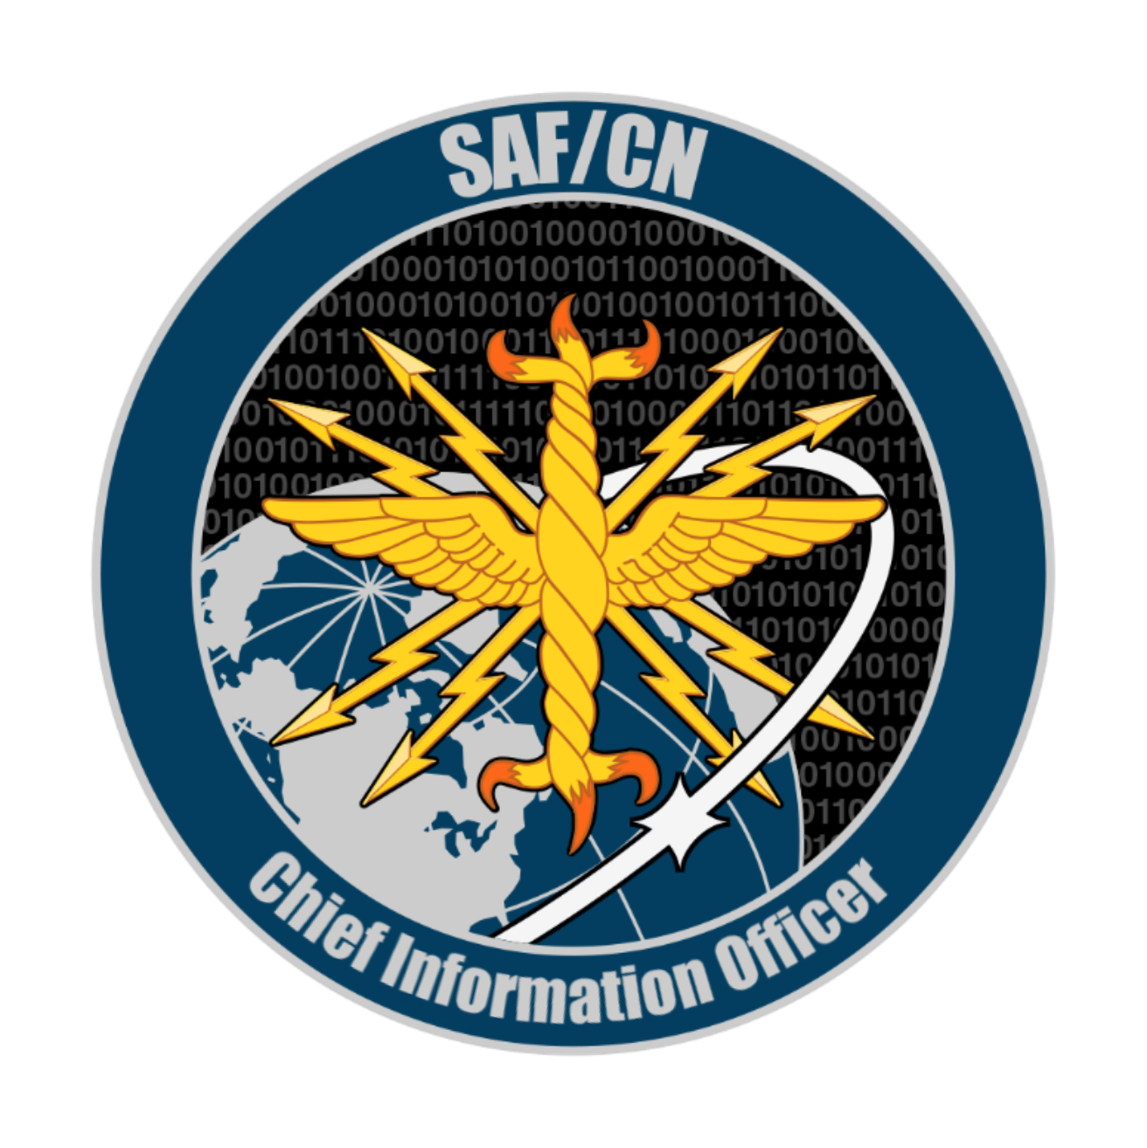 SAF/CN Chief Information Officer Patch